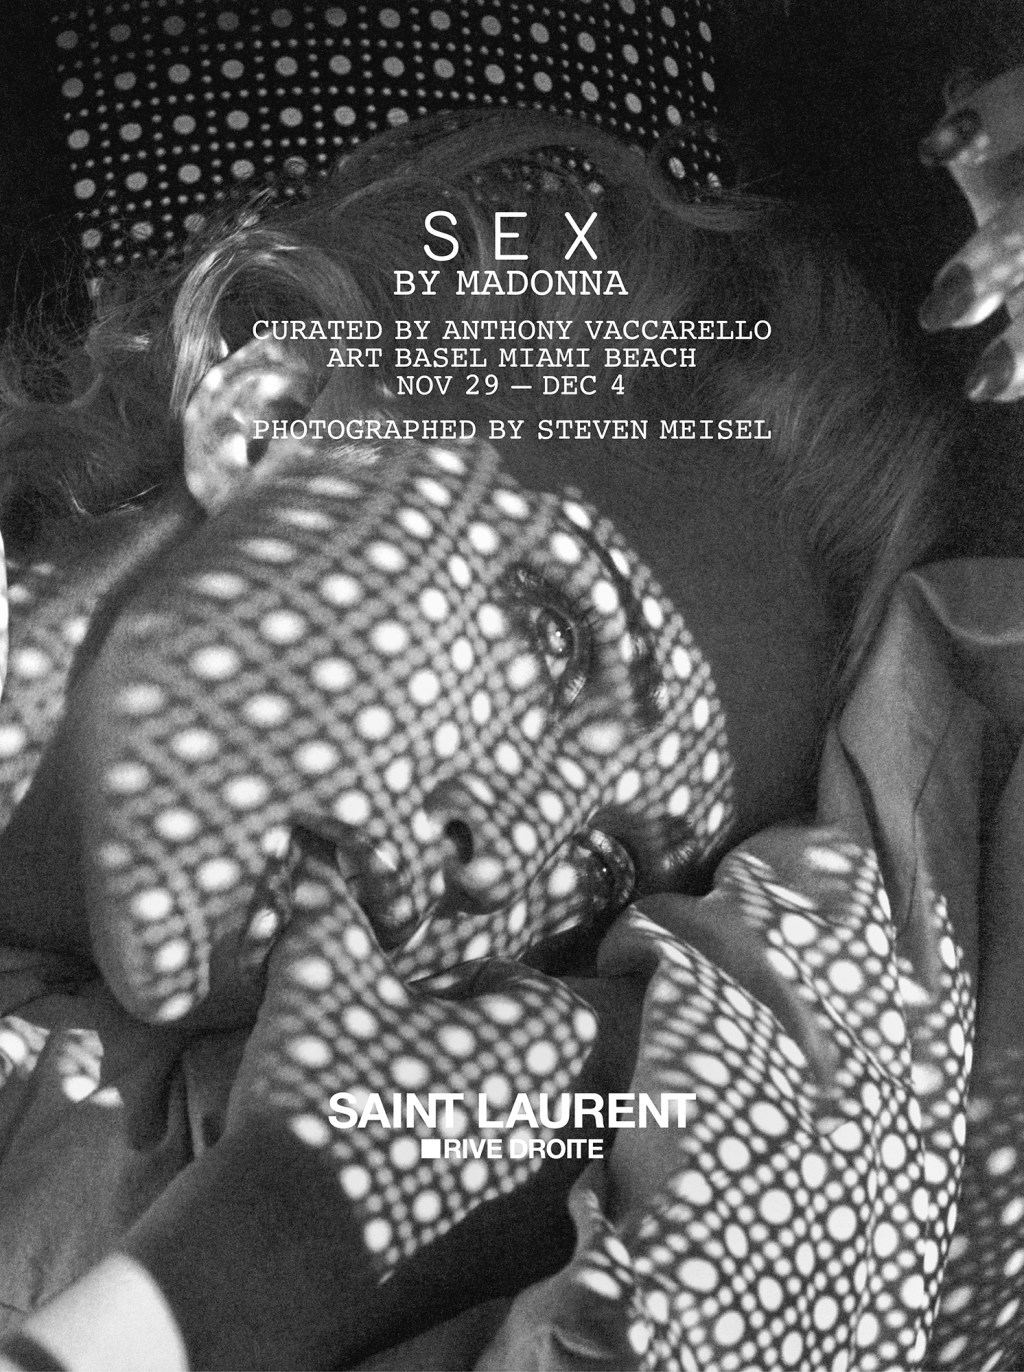 Art Basel Miami: Saint Laurent apresenta a mostra "Sex by Madonna"